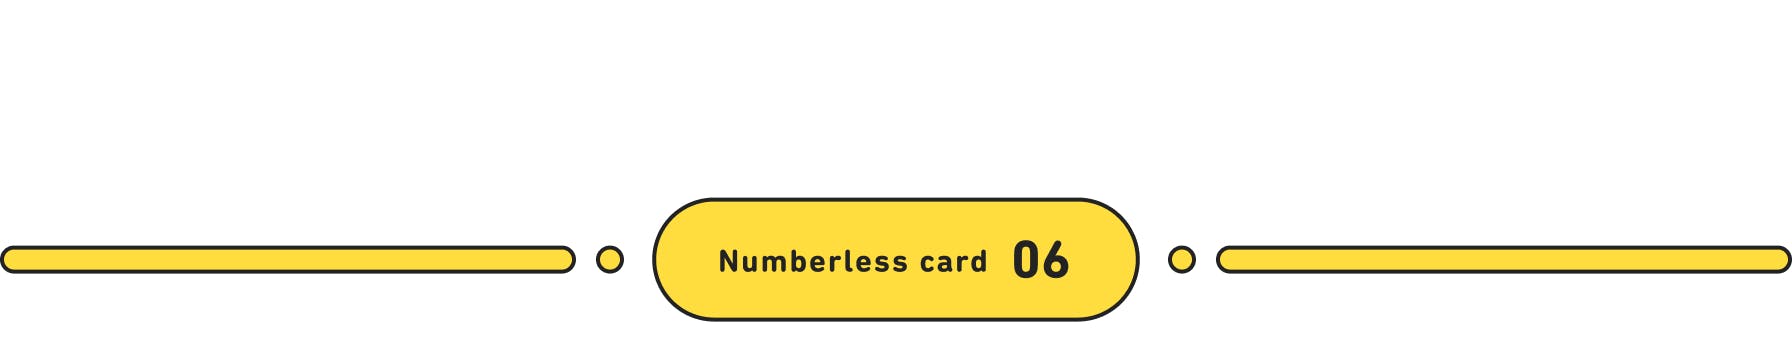 Numberless card 06